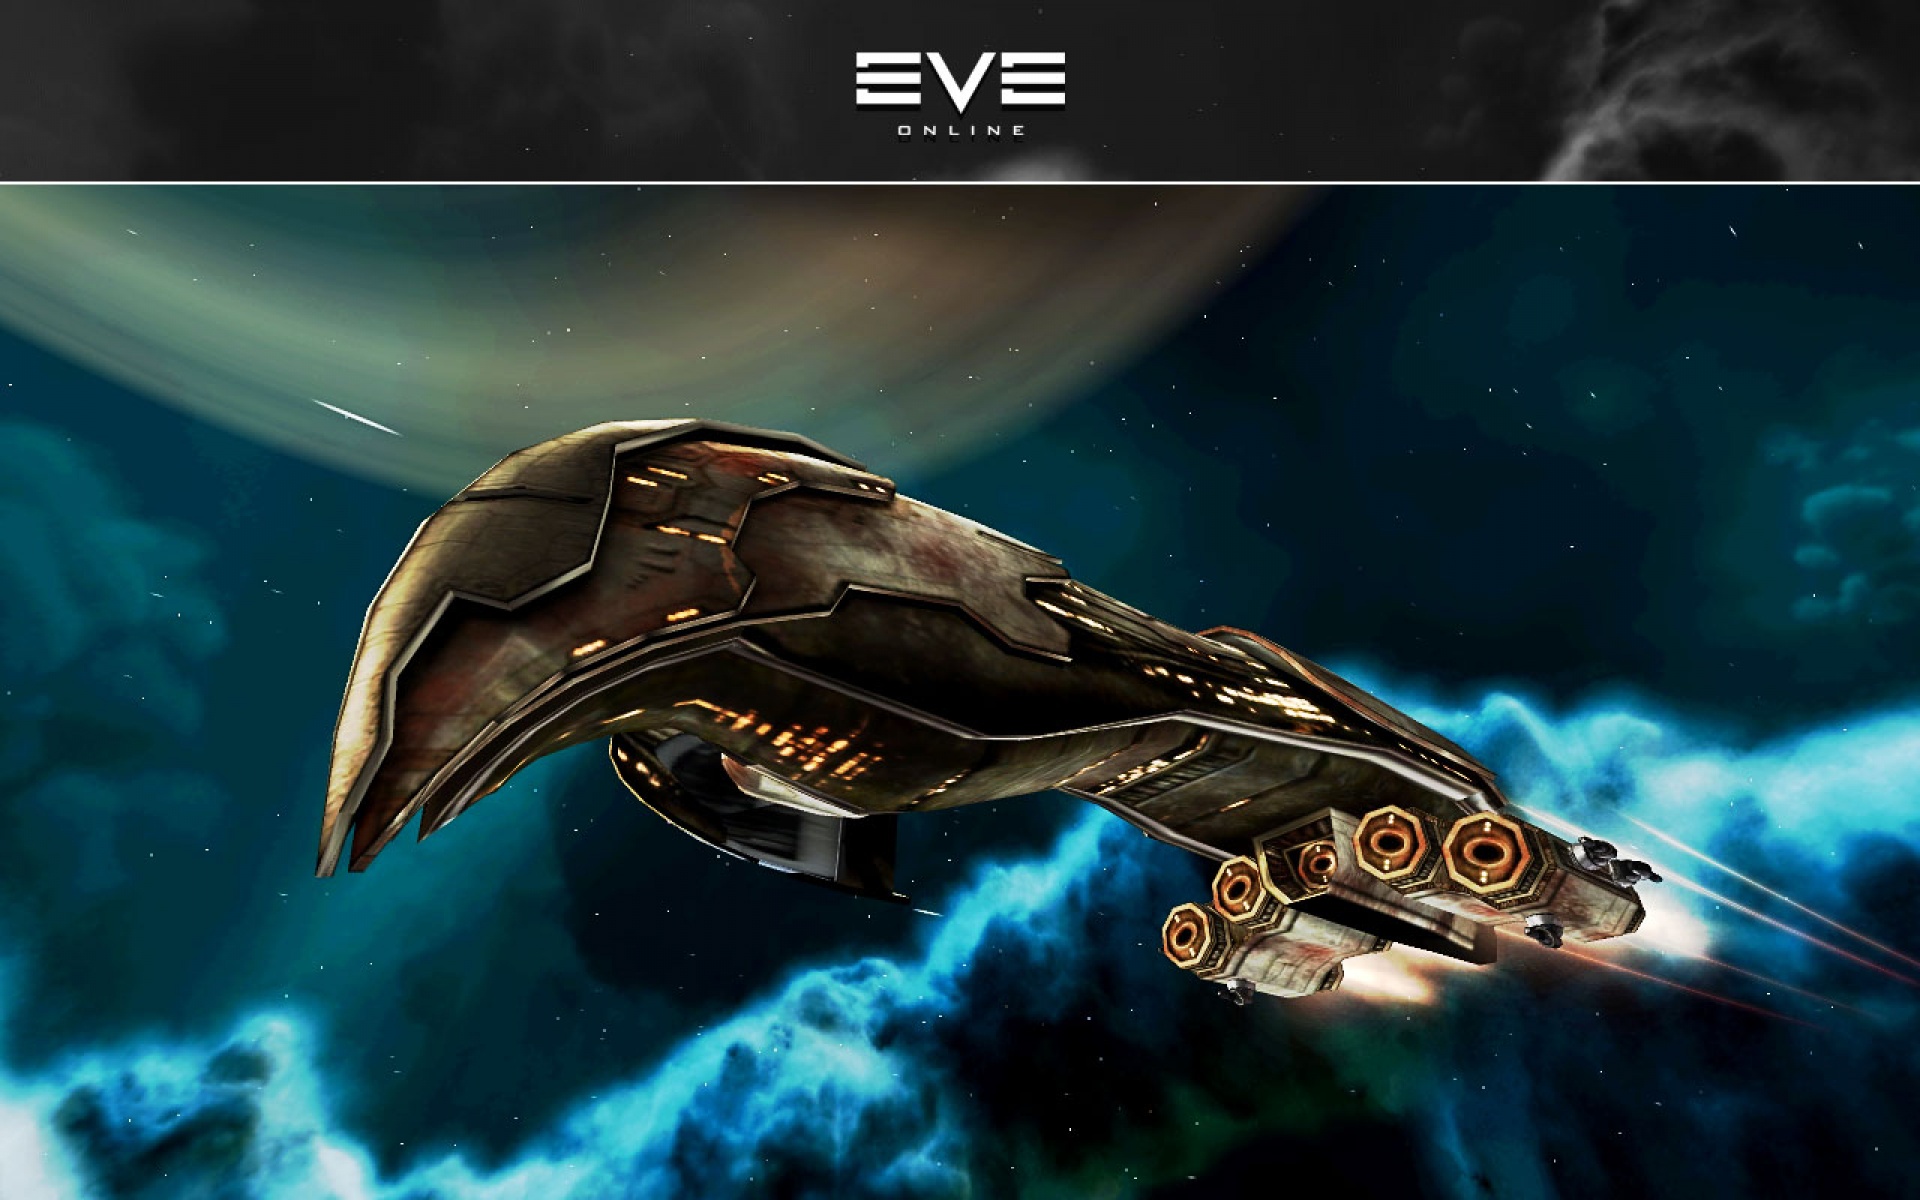 Eve Online Wallpaper Pictures